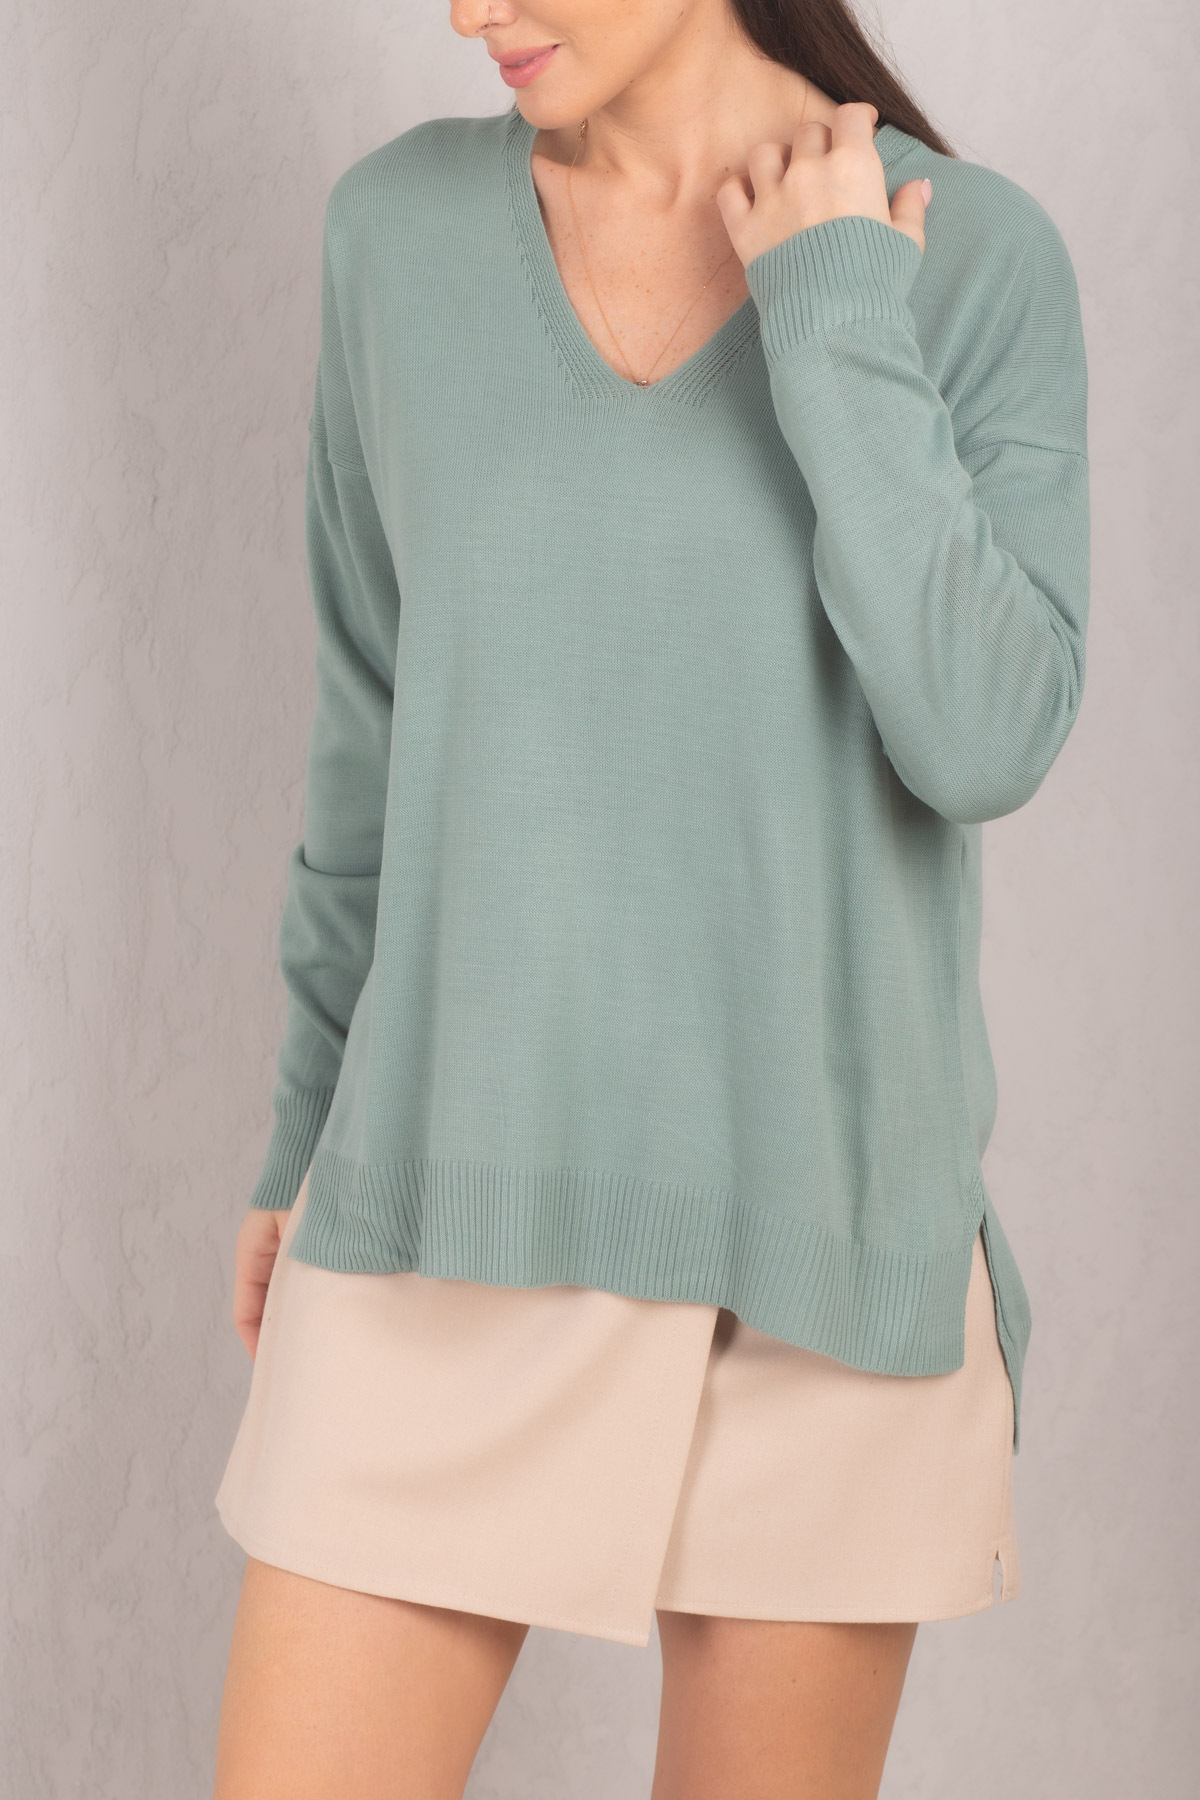 armonika Women's Turquoise V-Neck Front Short Back Long Knitwear Sweater